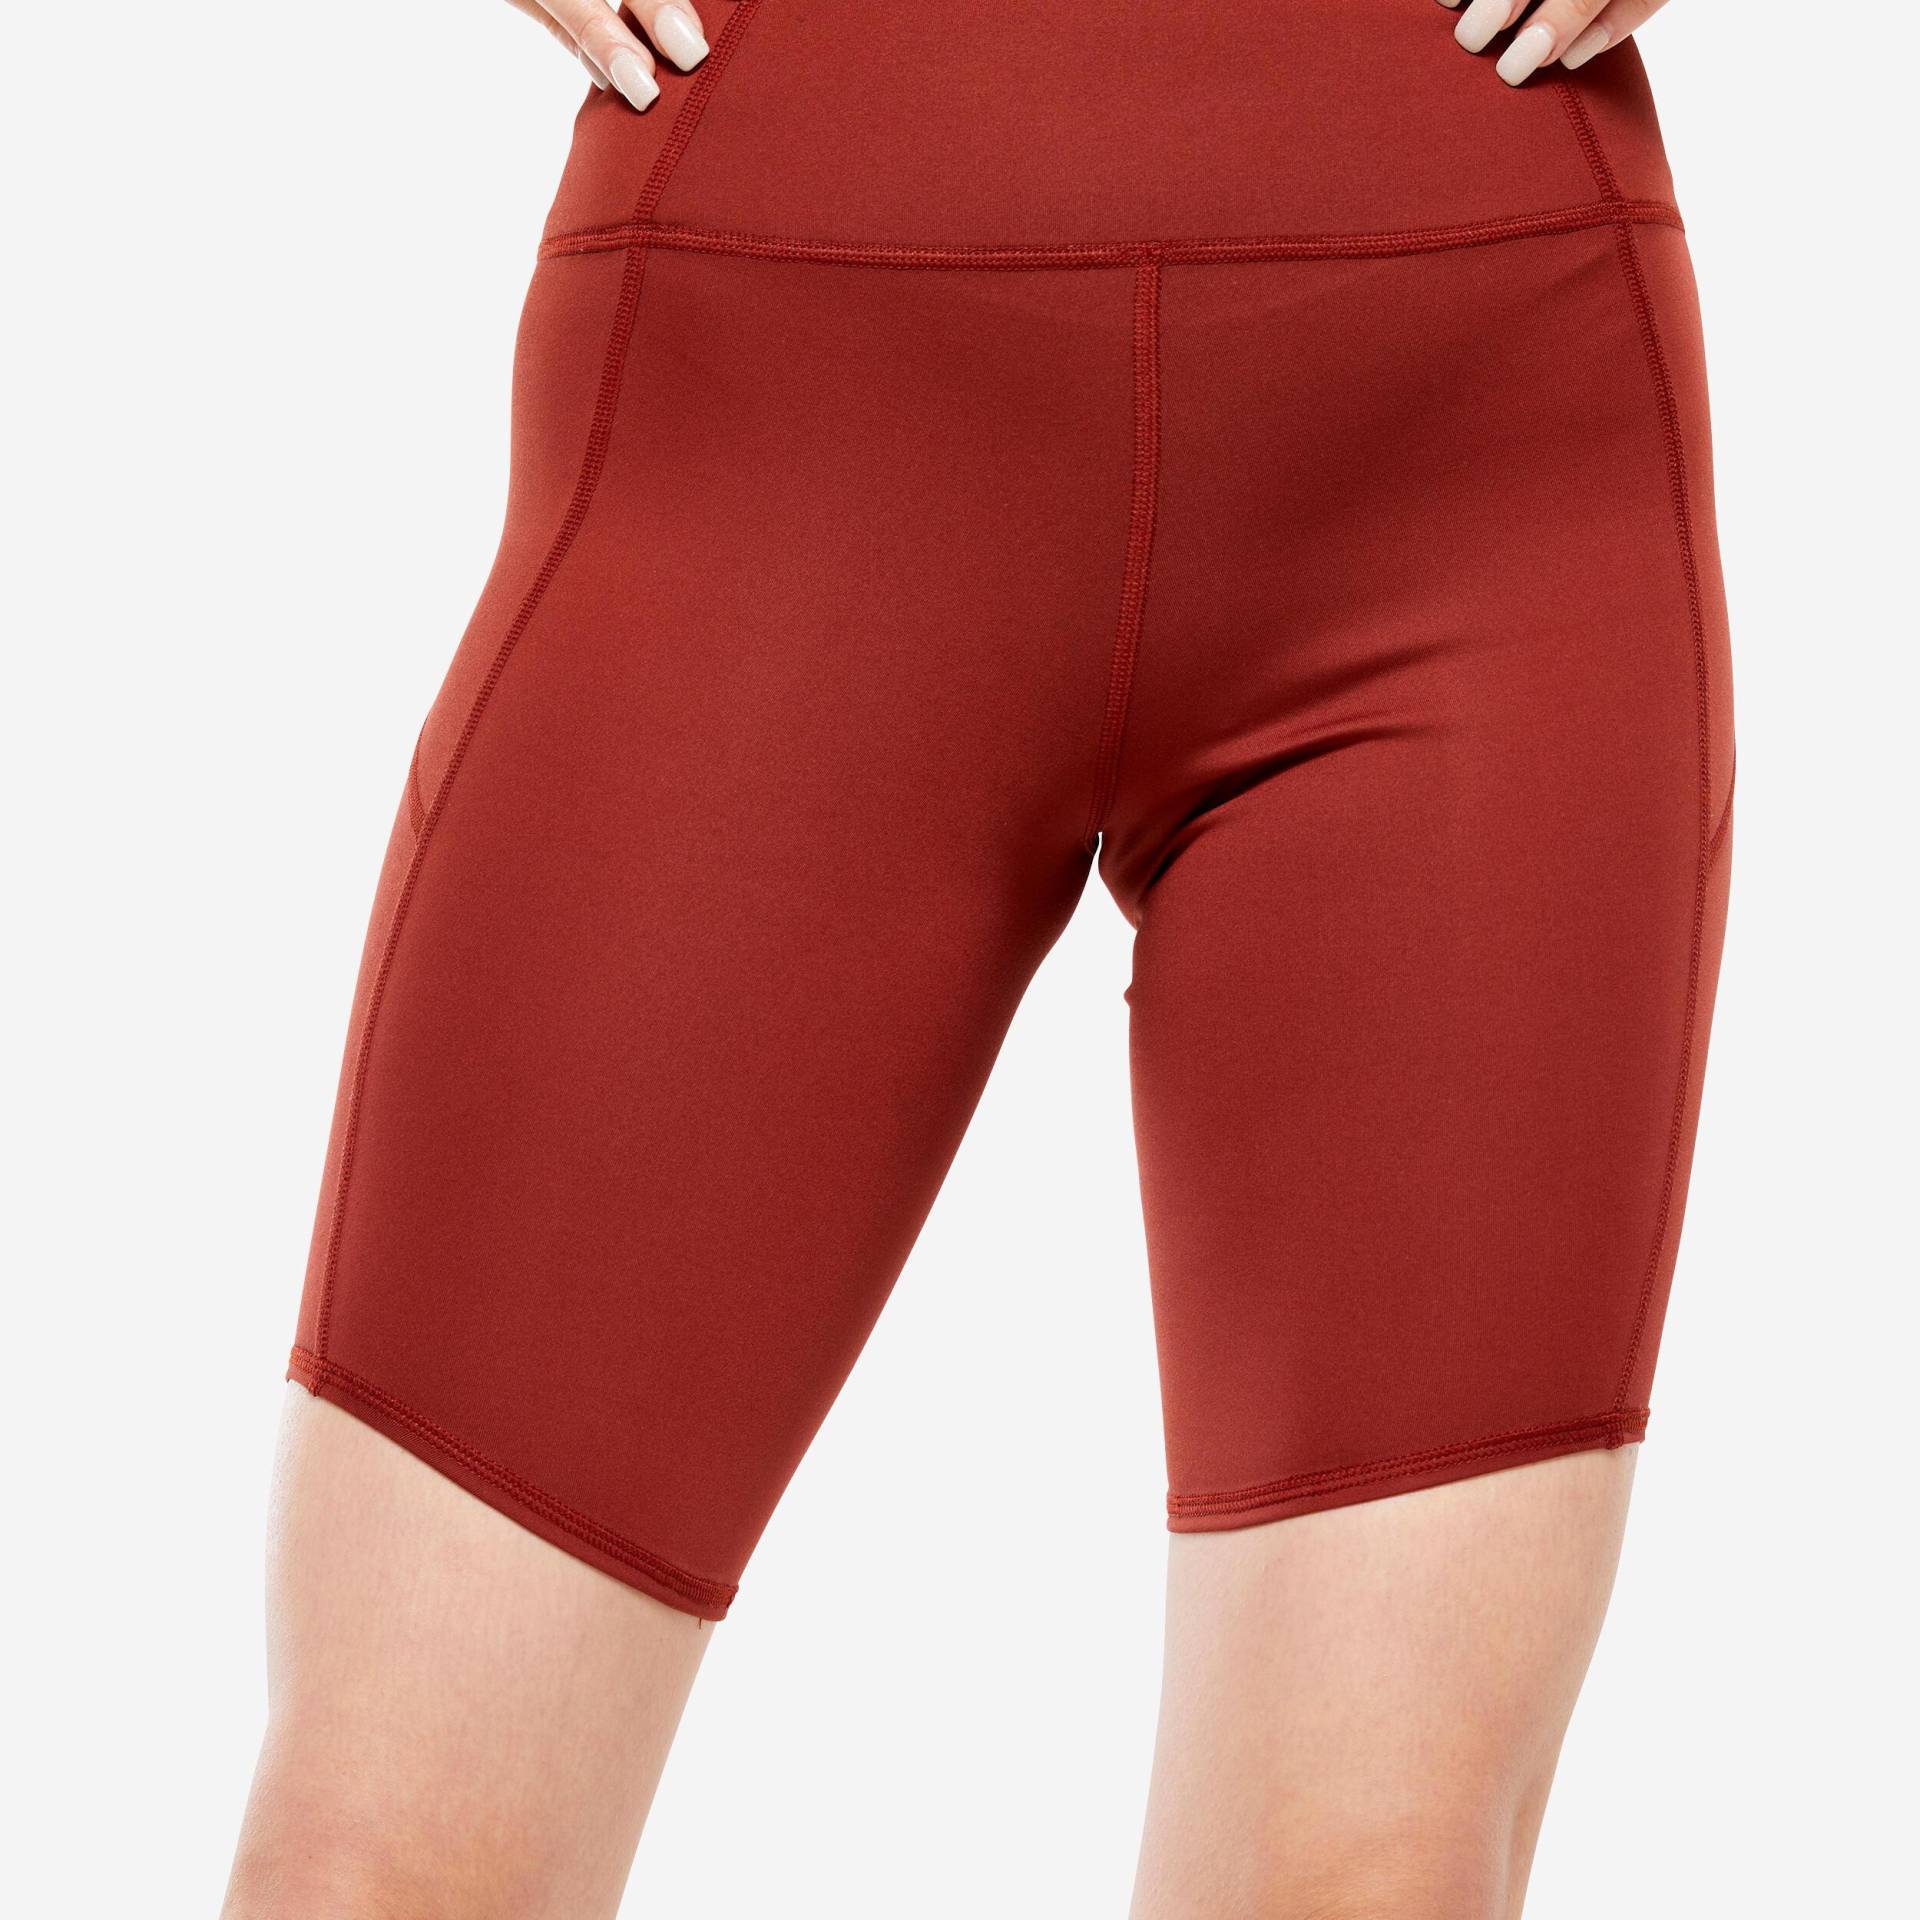 Shorts - Cardio Damen Bordeaux XL von KIMJALY